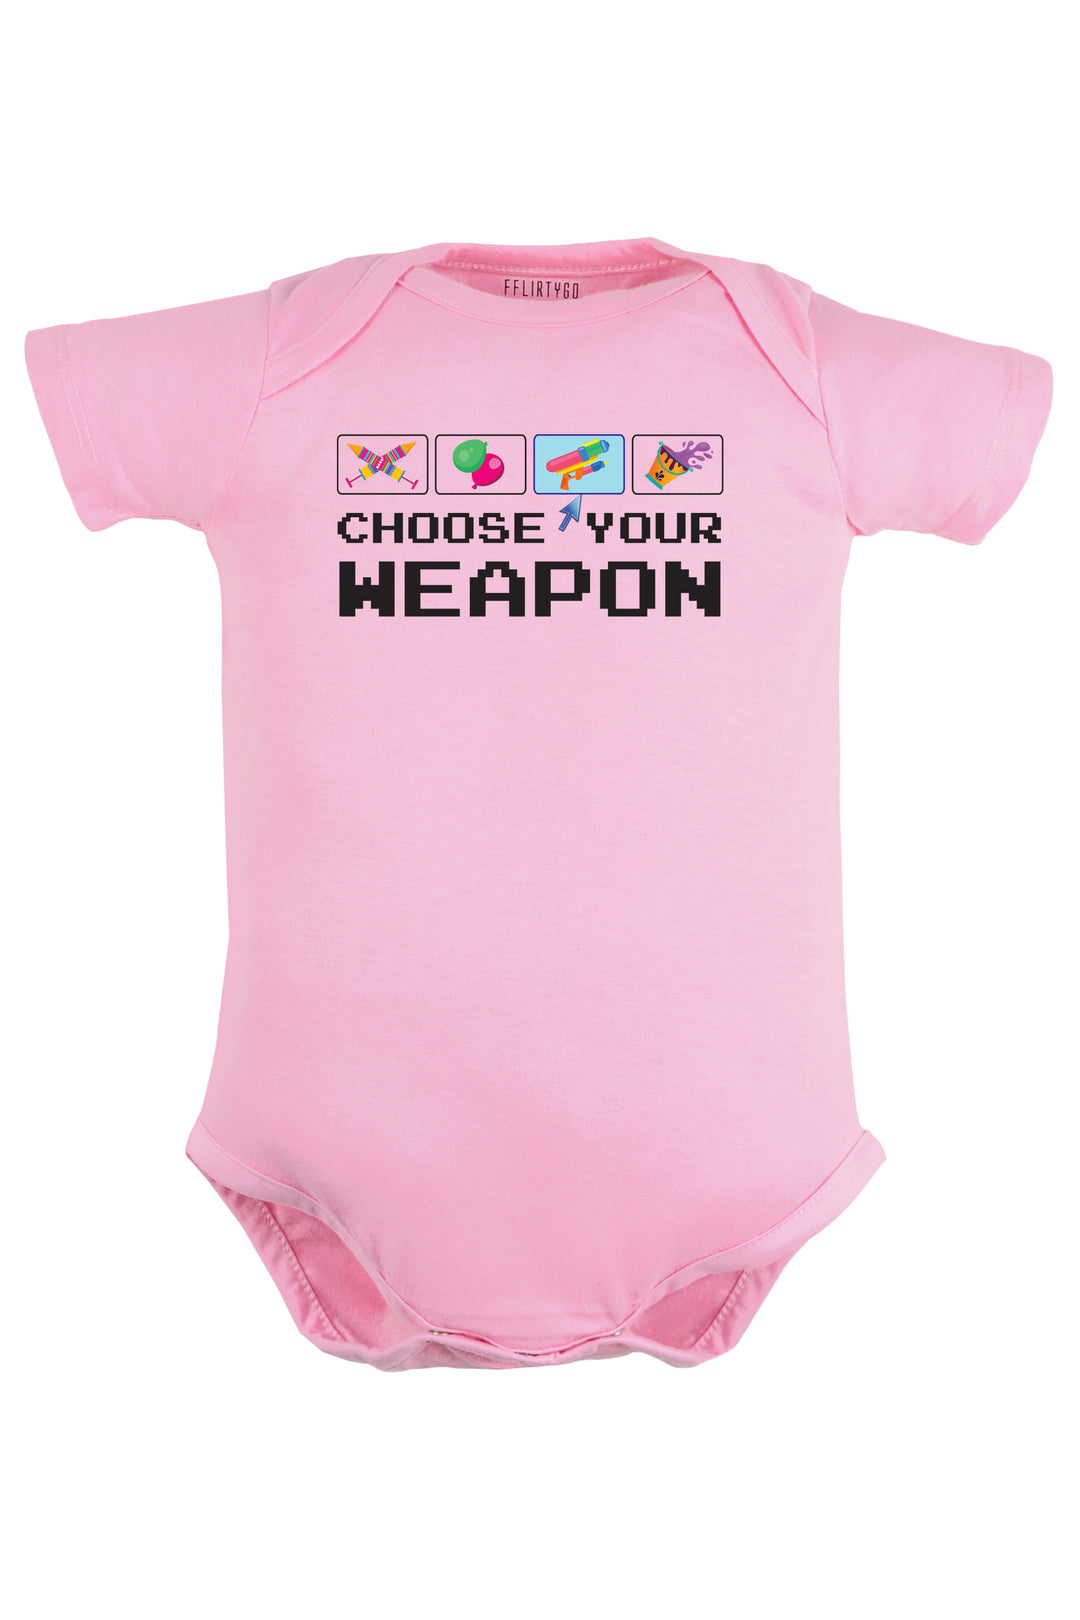 Choose Your Weapon Baby Romper | Onesies